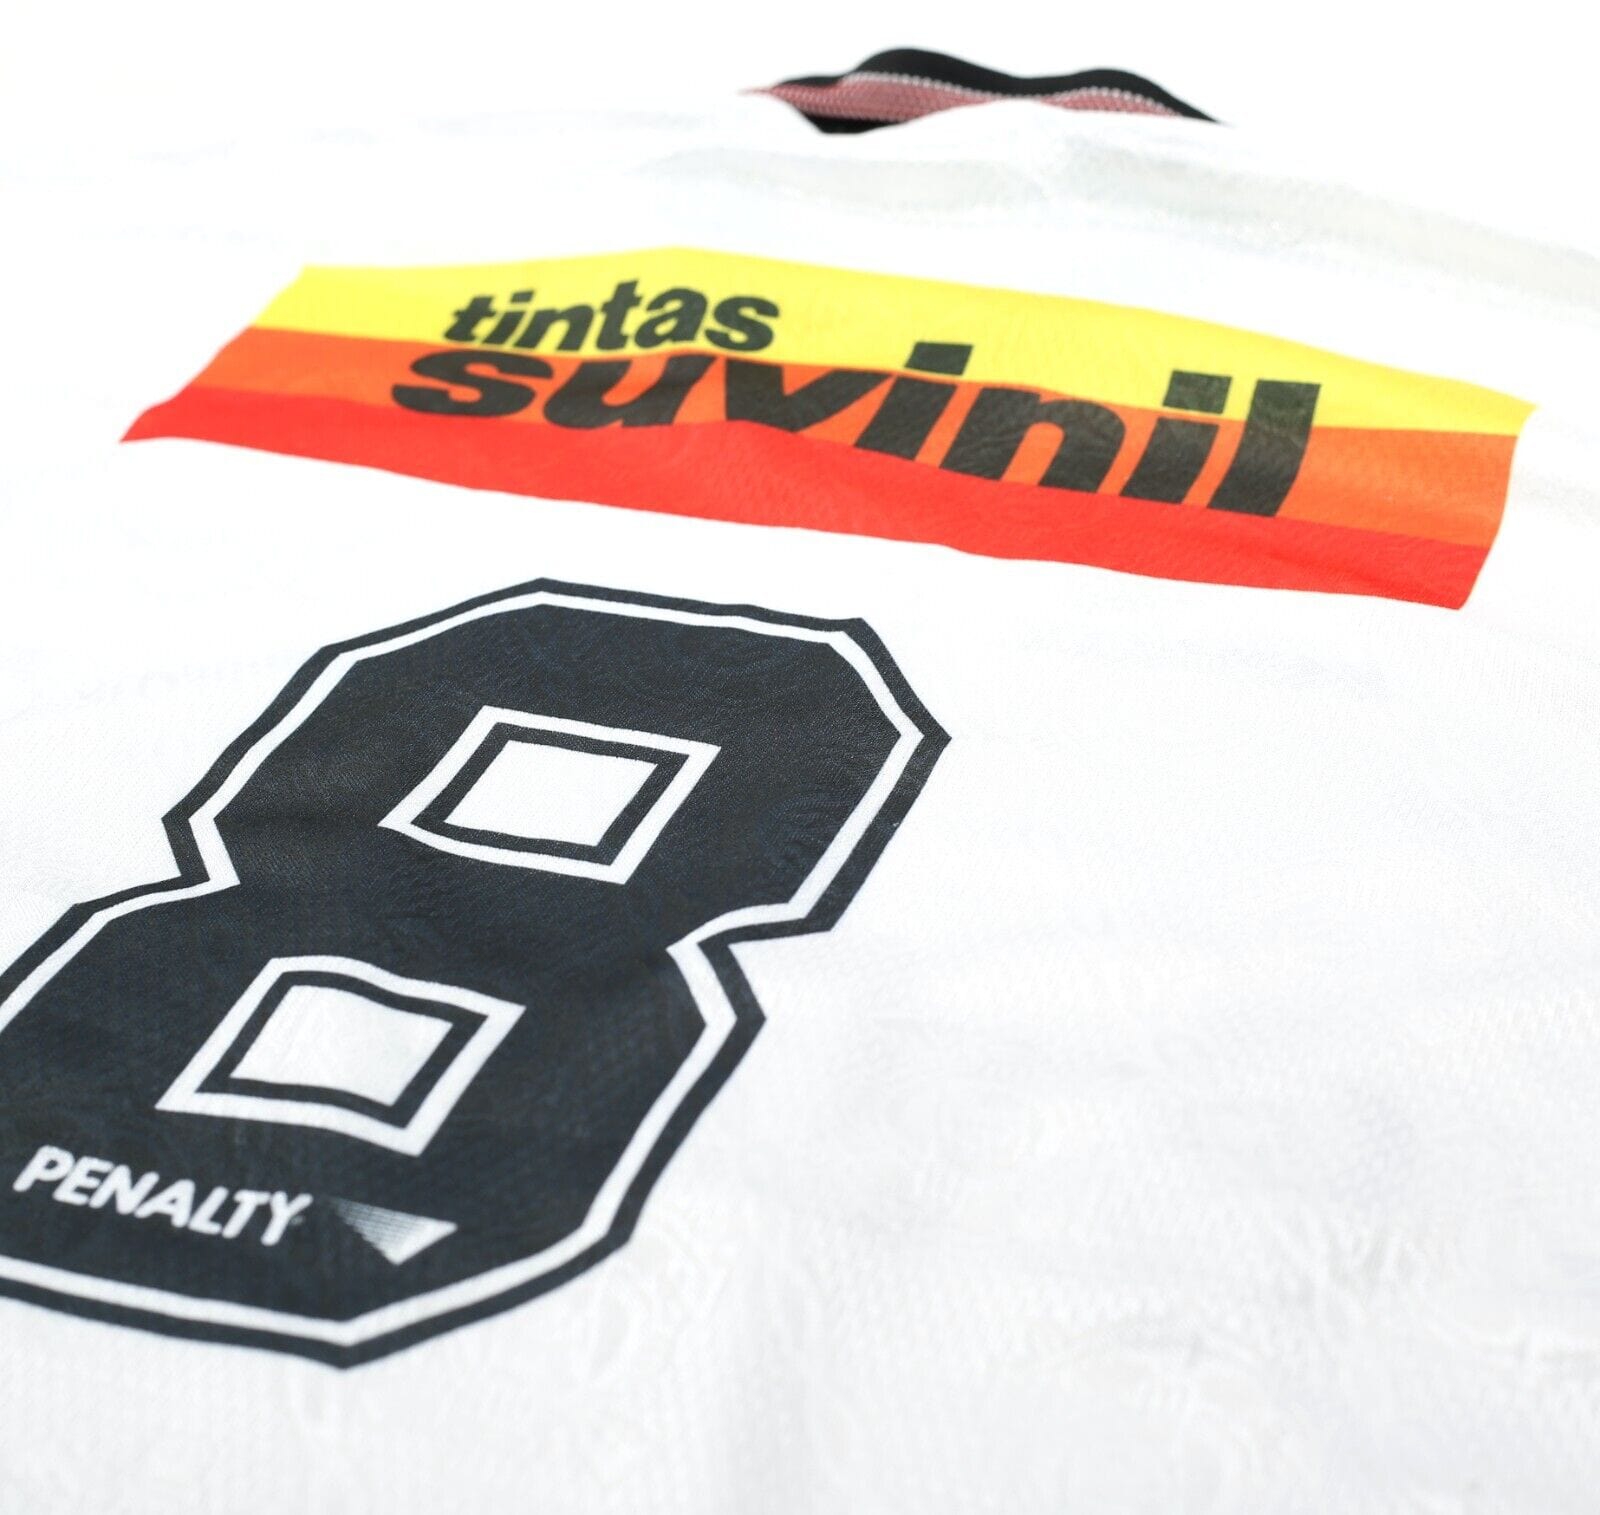 1996 EDMUNDO #8 Corinthians Vintage Penalty Home Football Shirt Jersey (M)